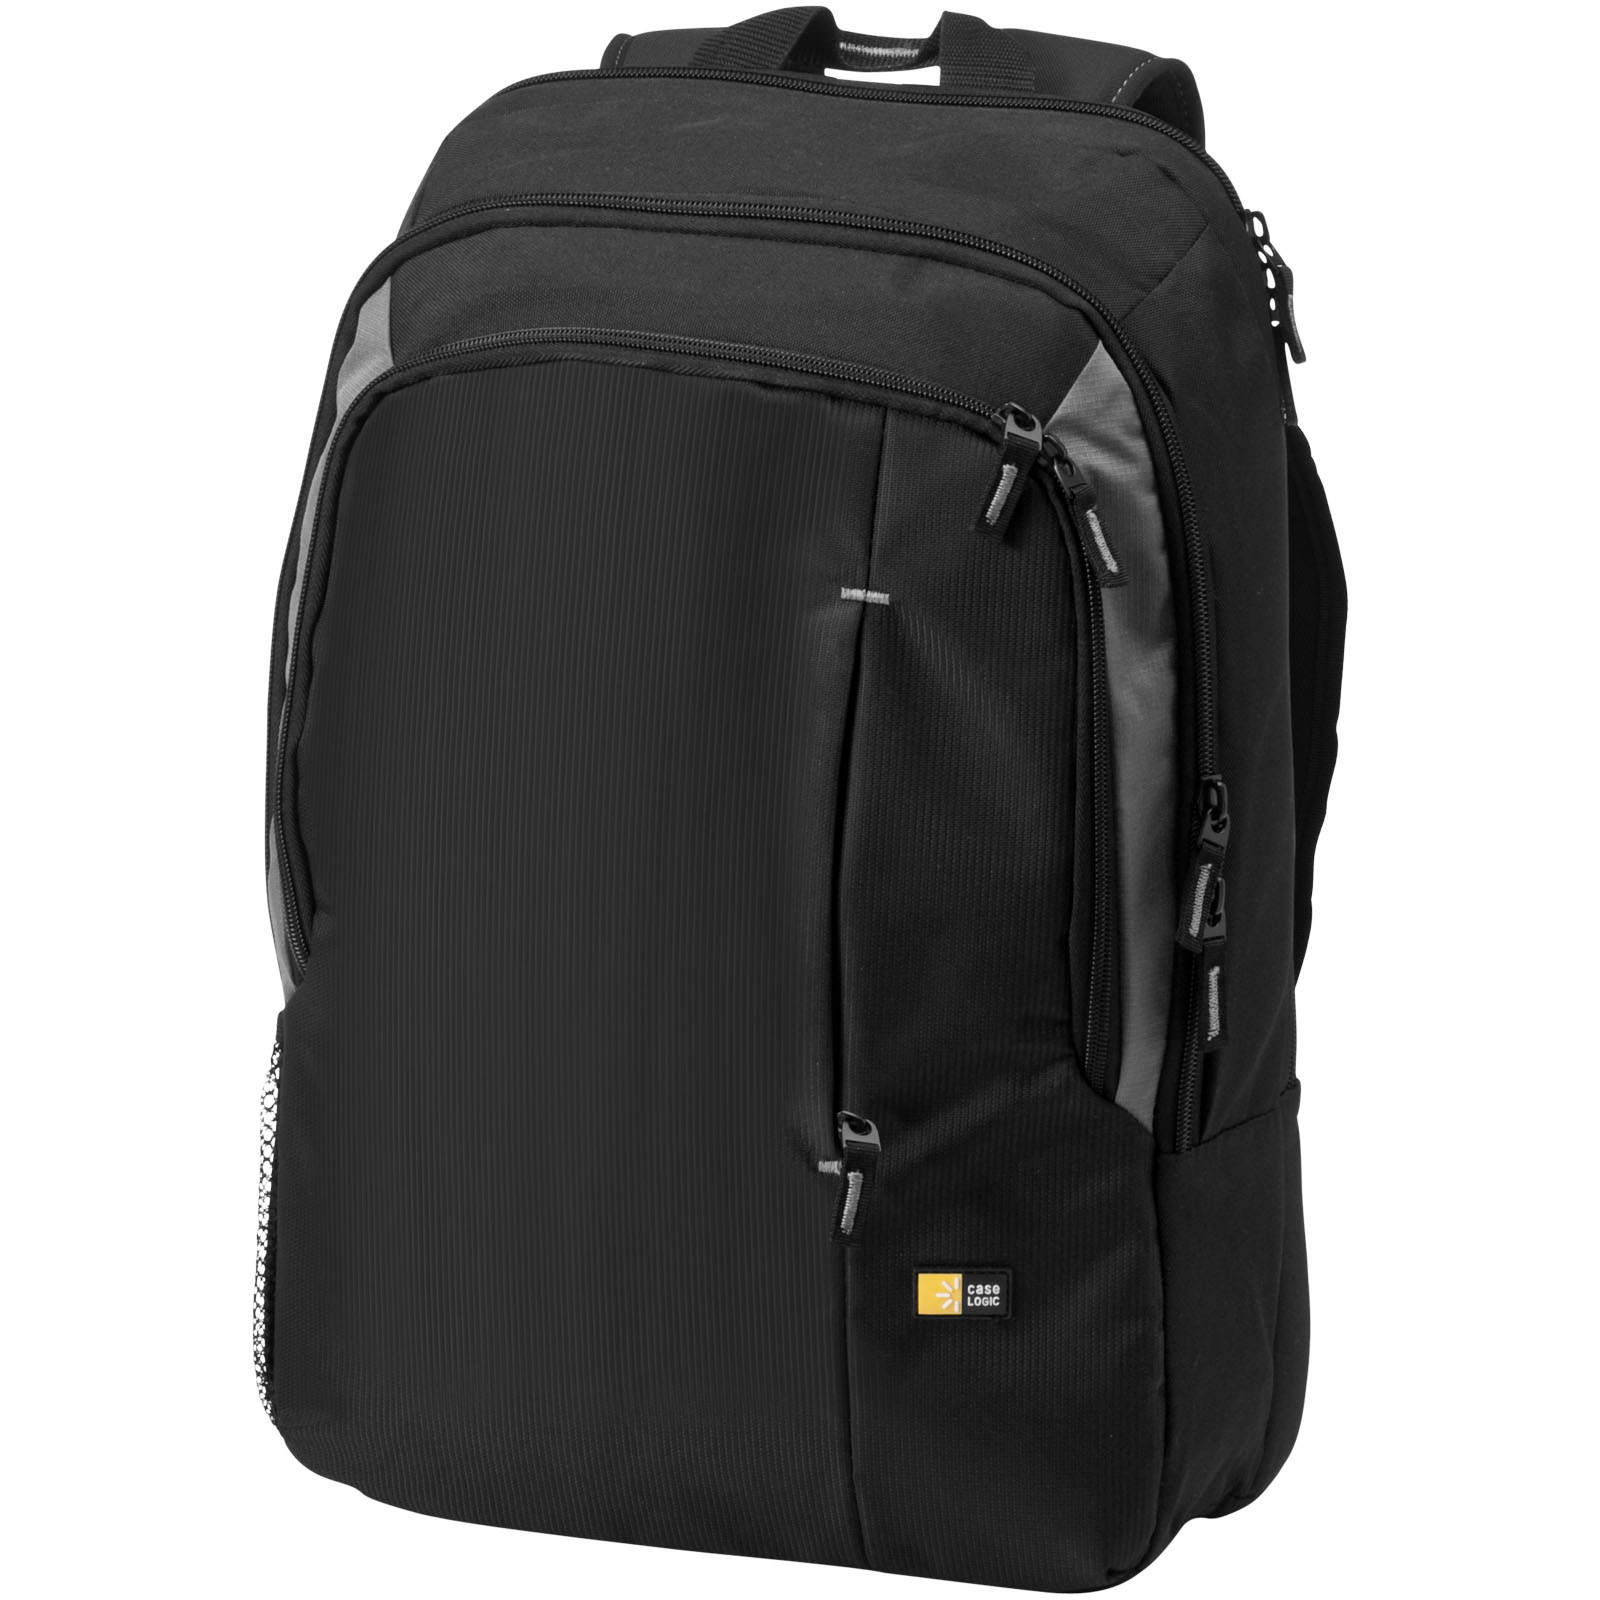 17" laptop backpack with security pocket JURAT - solid black / gun metal